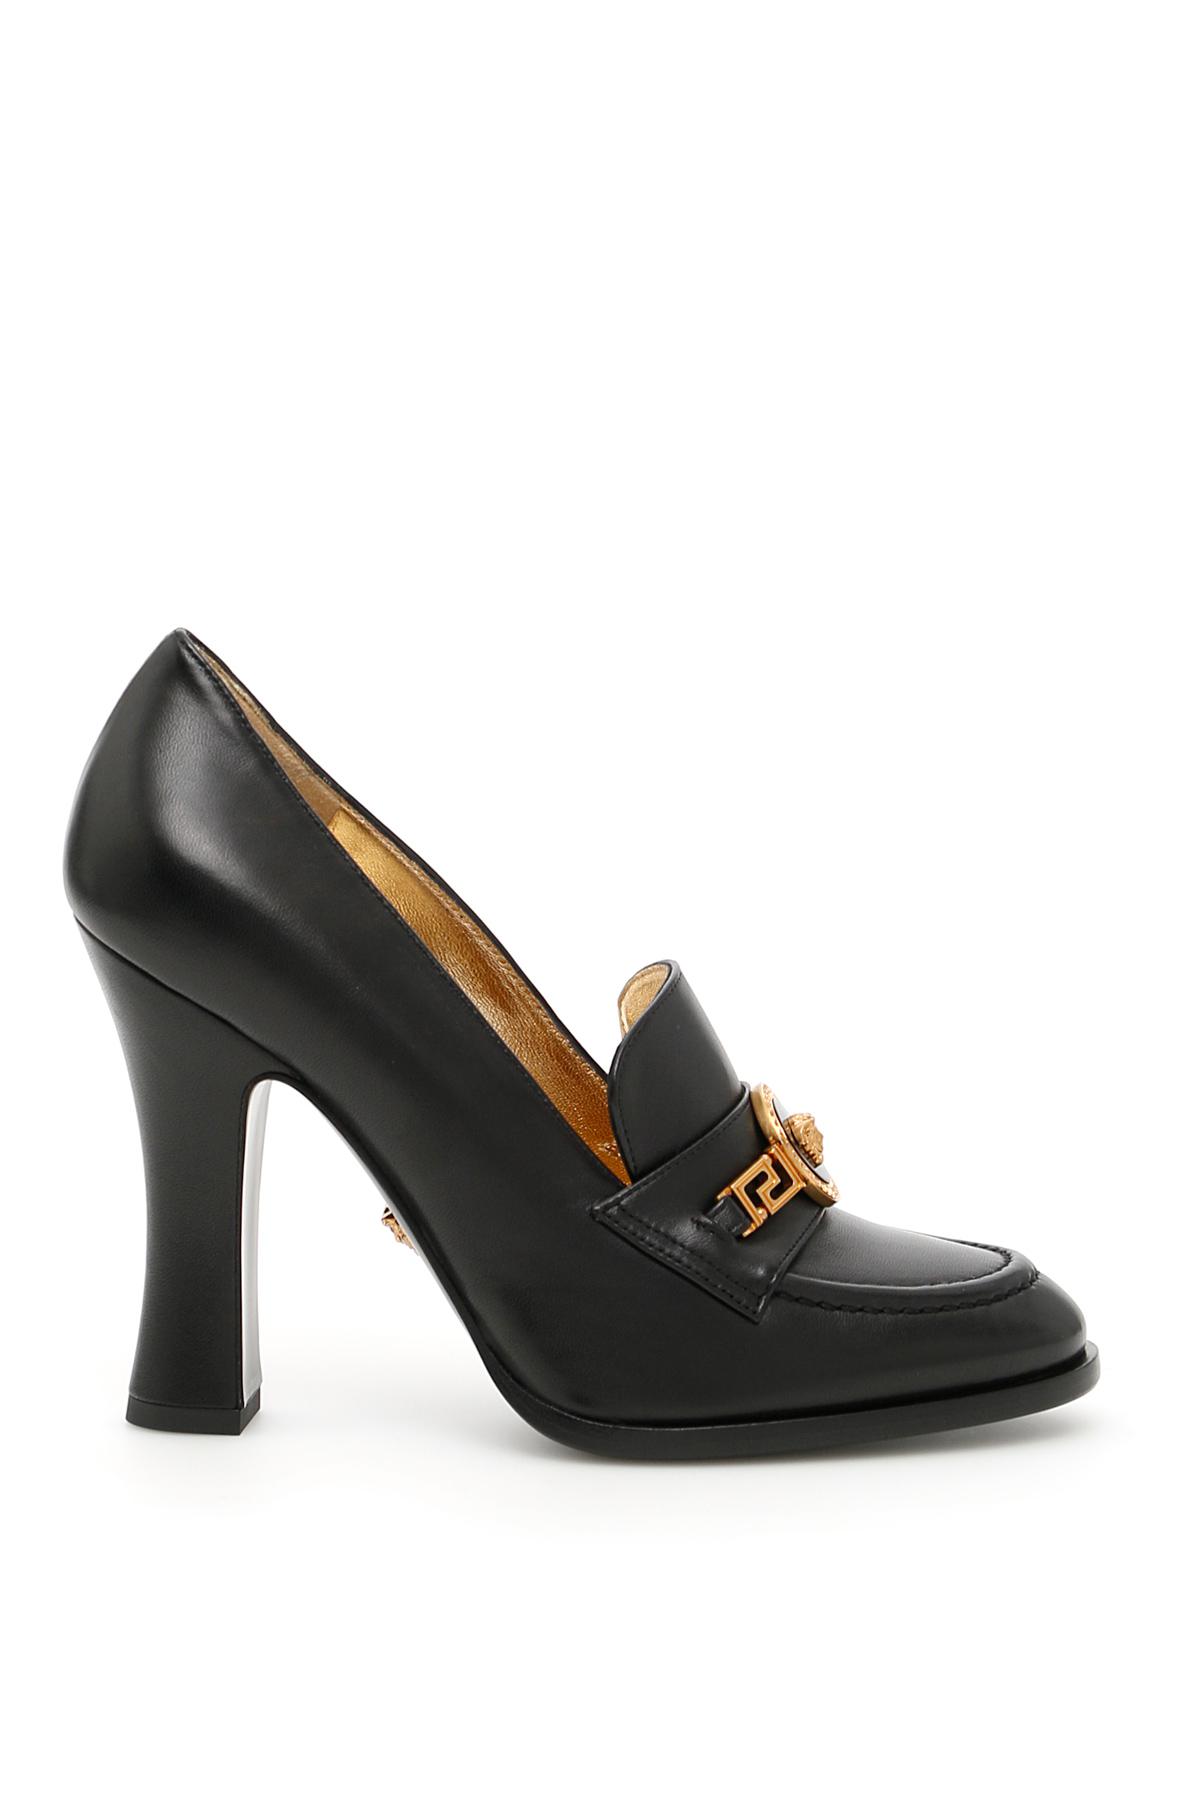 versace tribute loafer heels